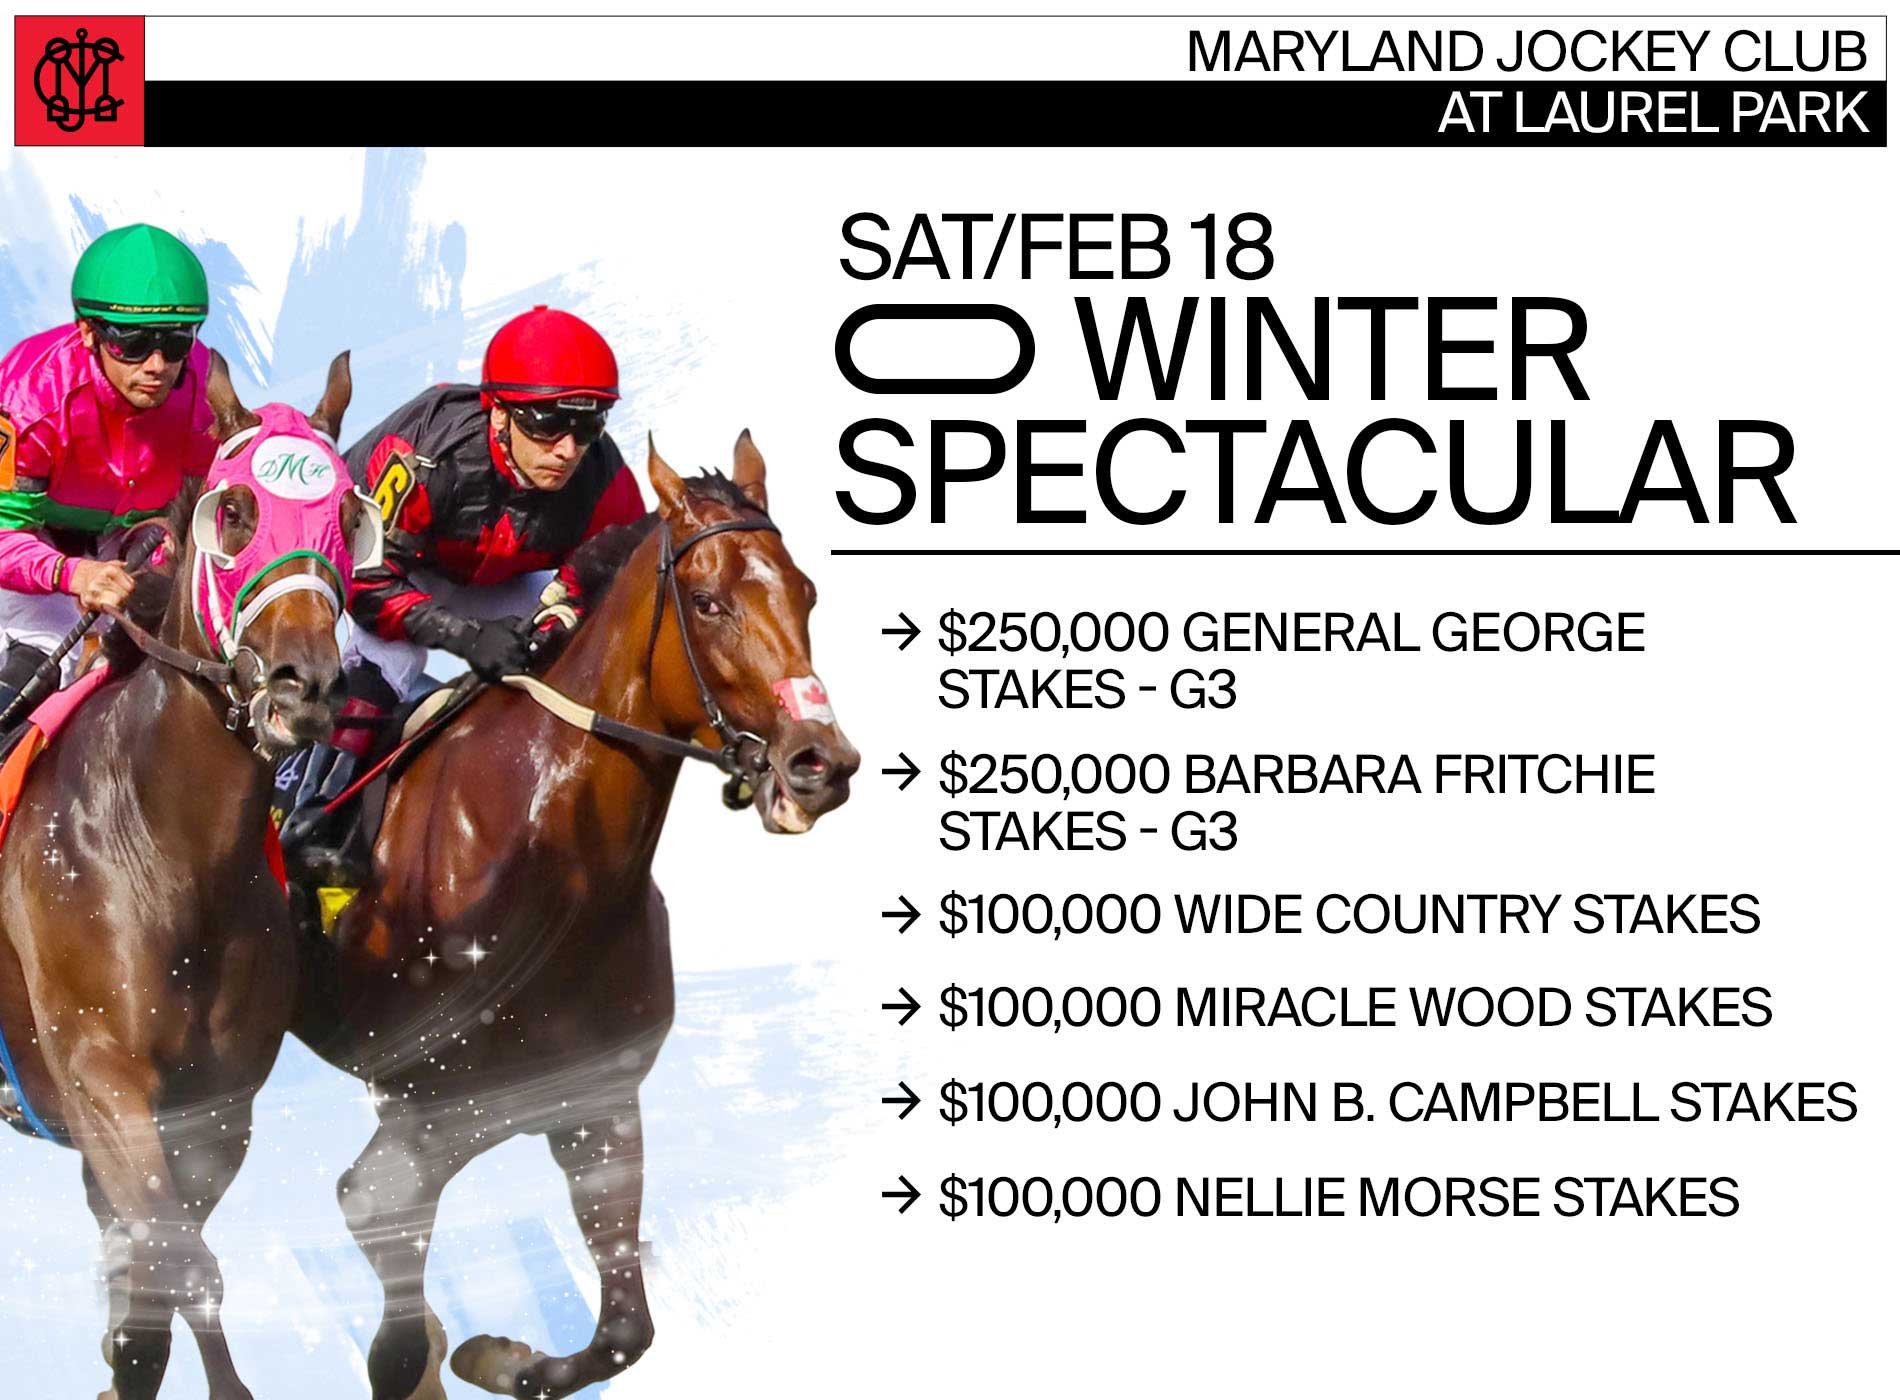 Winter Spectacular - Maryland Jockey Club